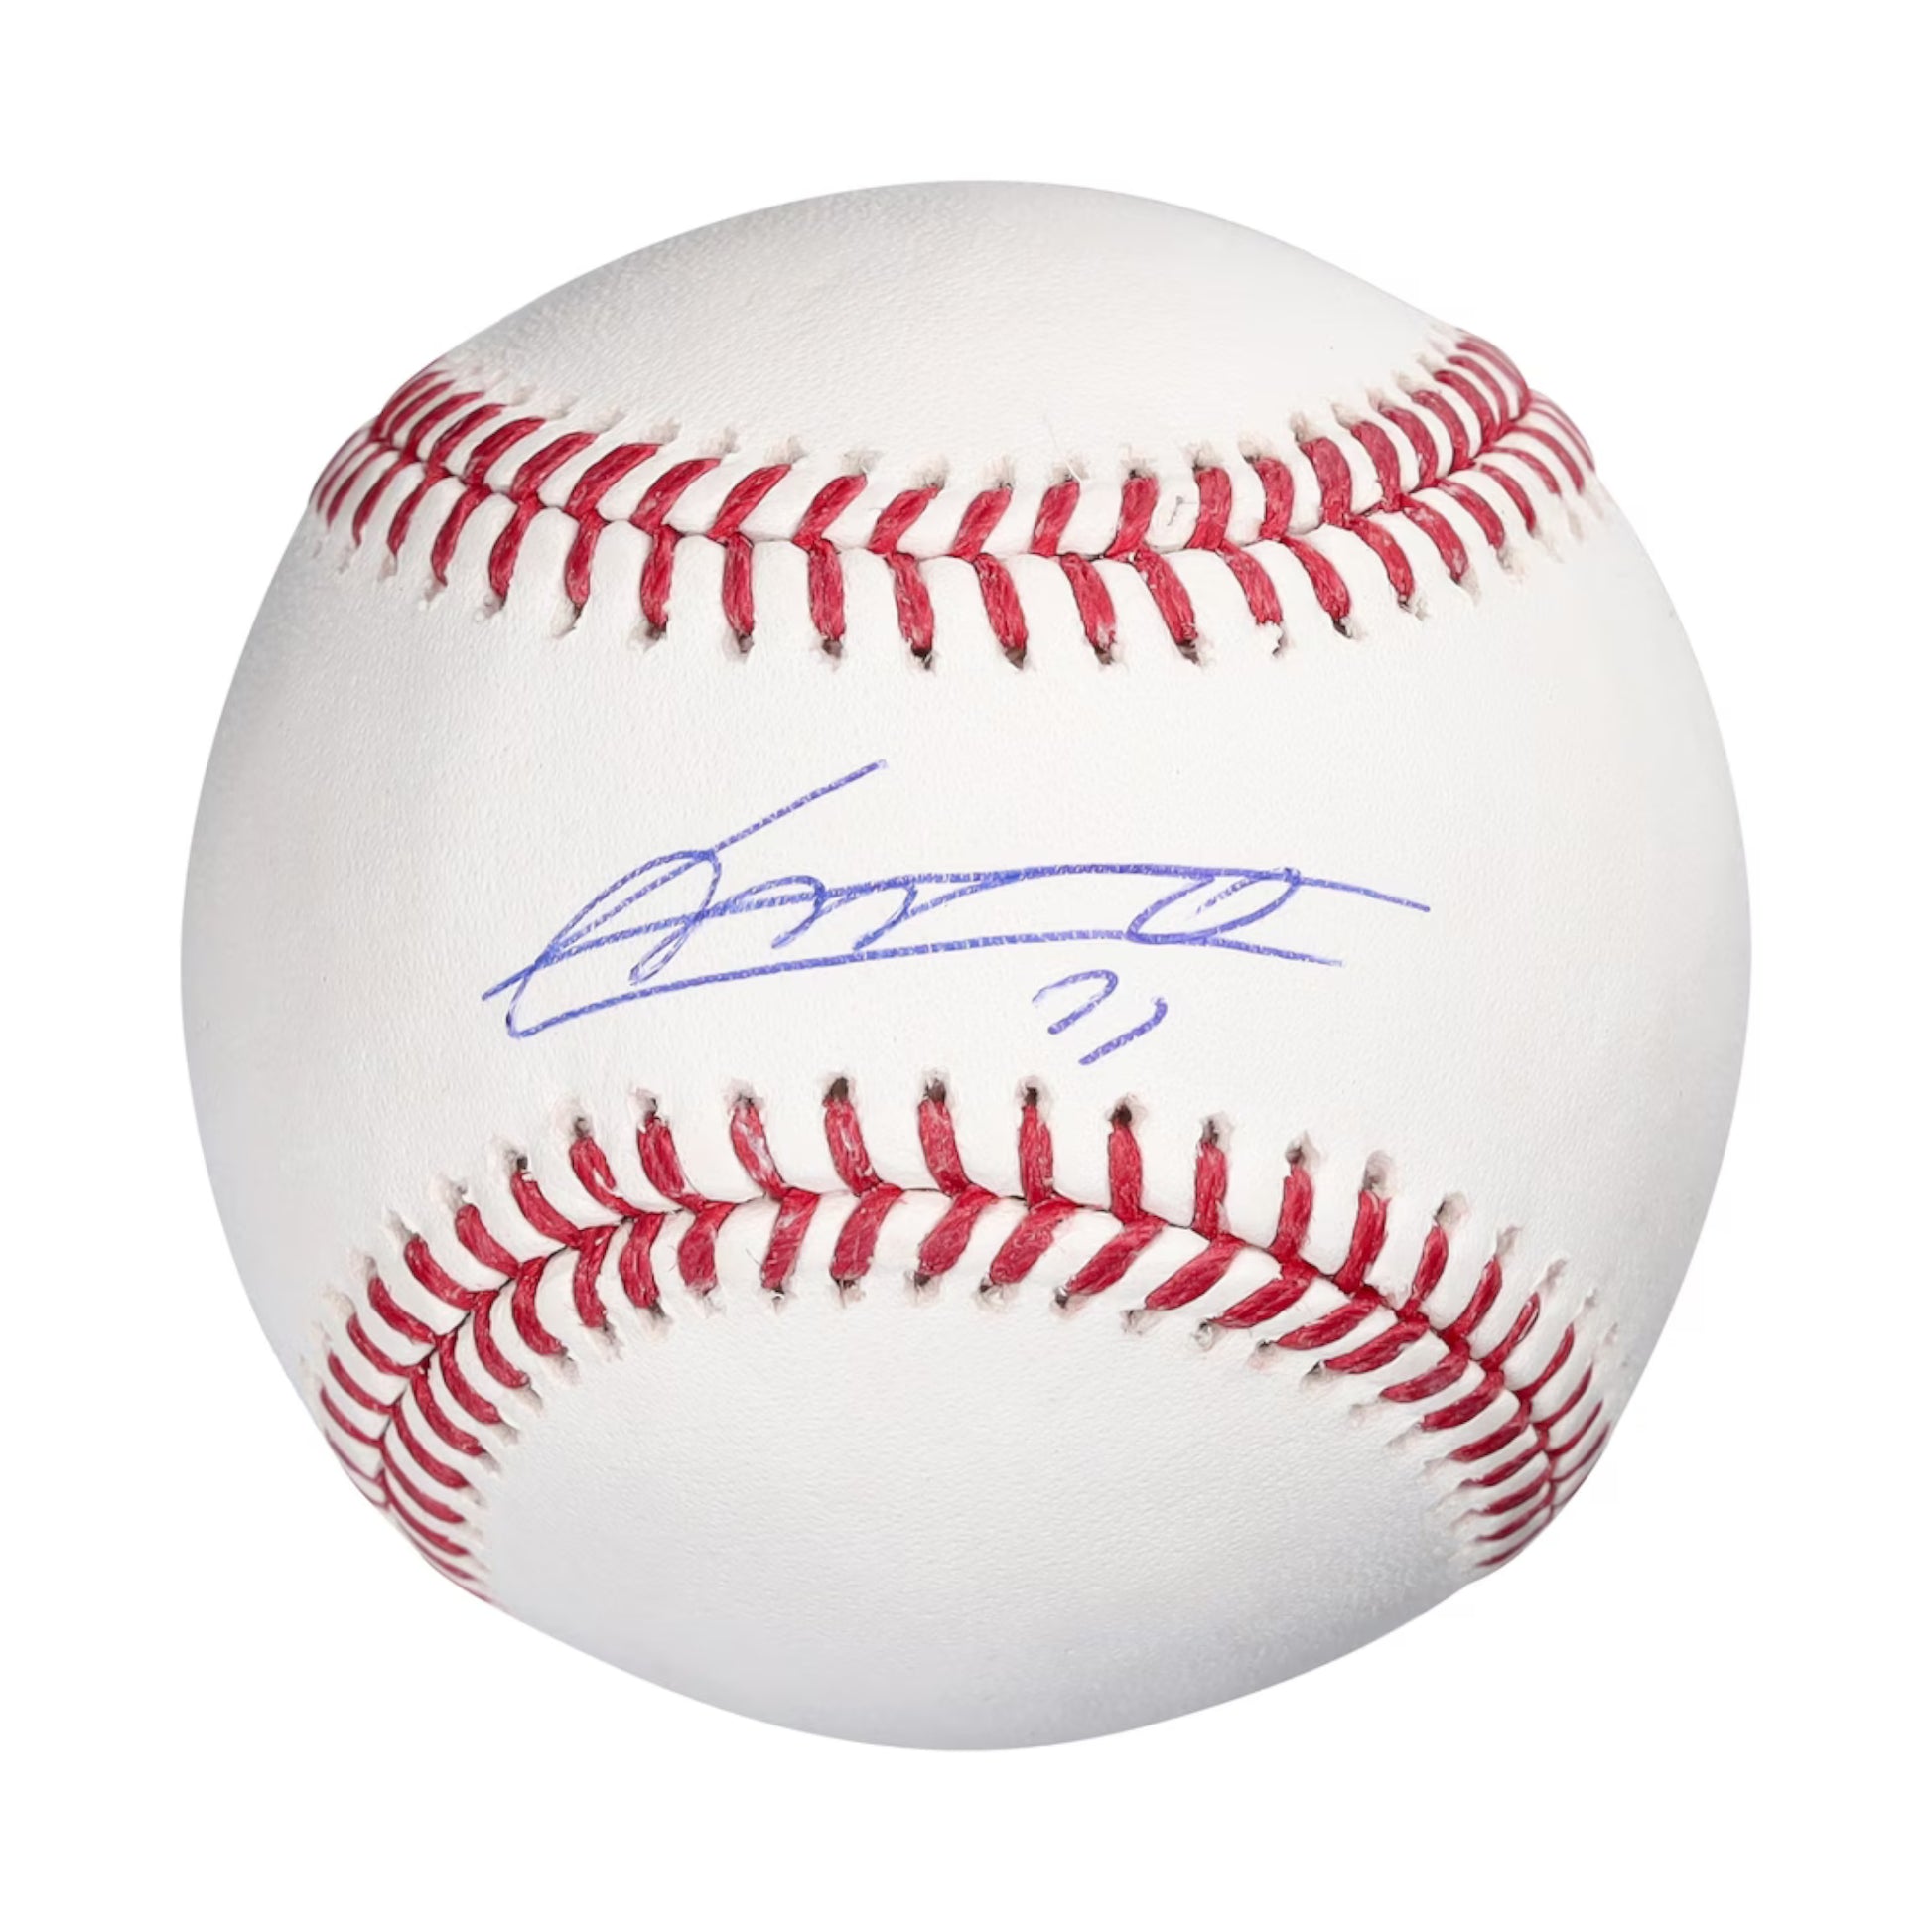 Vladimir Guerrero Jr. Autographed Rawlings Official MLB Baseball